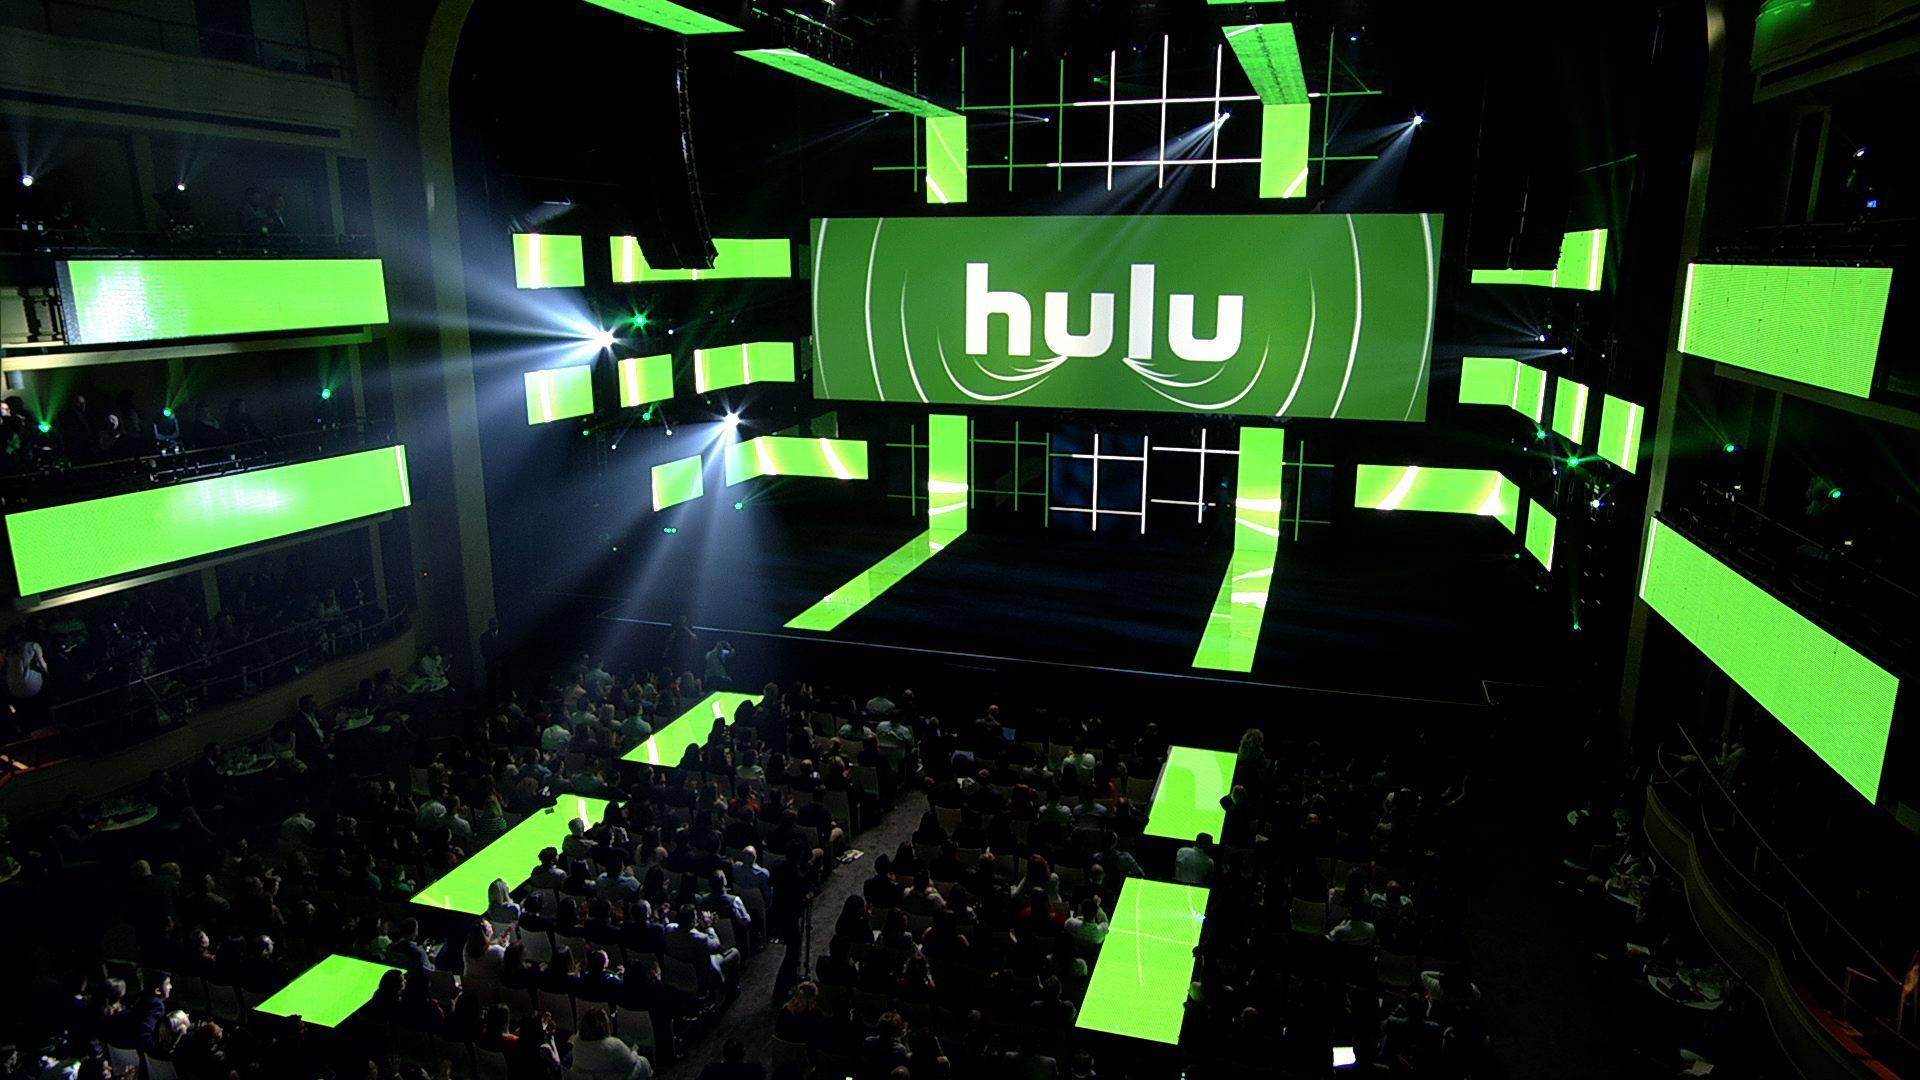 Hulu's Newfront Presentation Stage Background